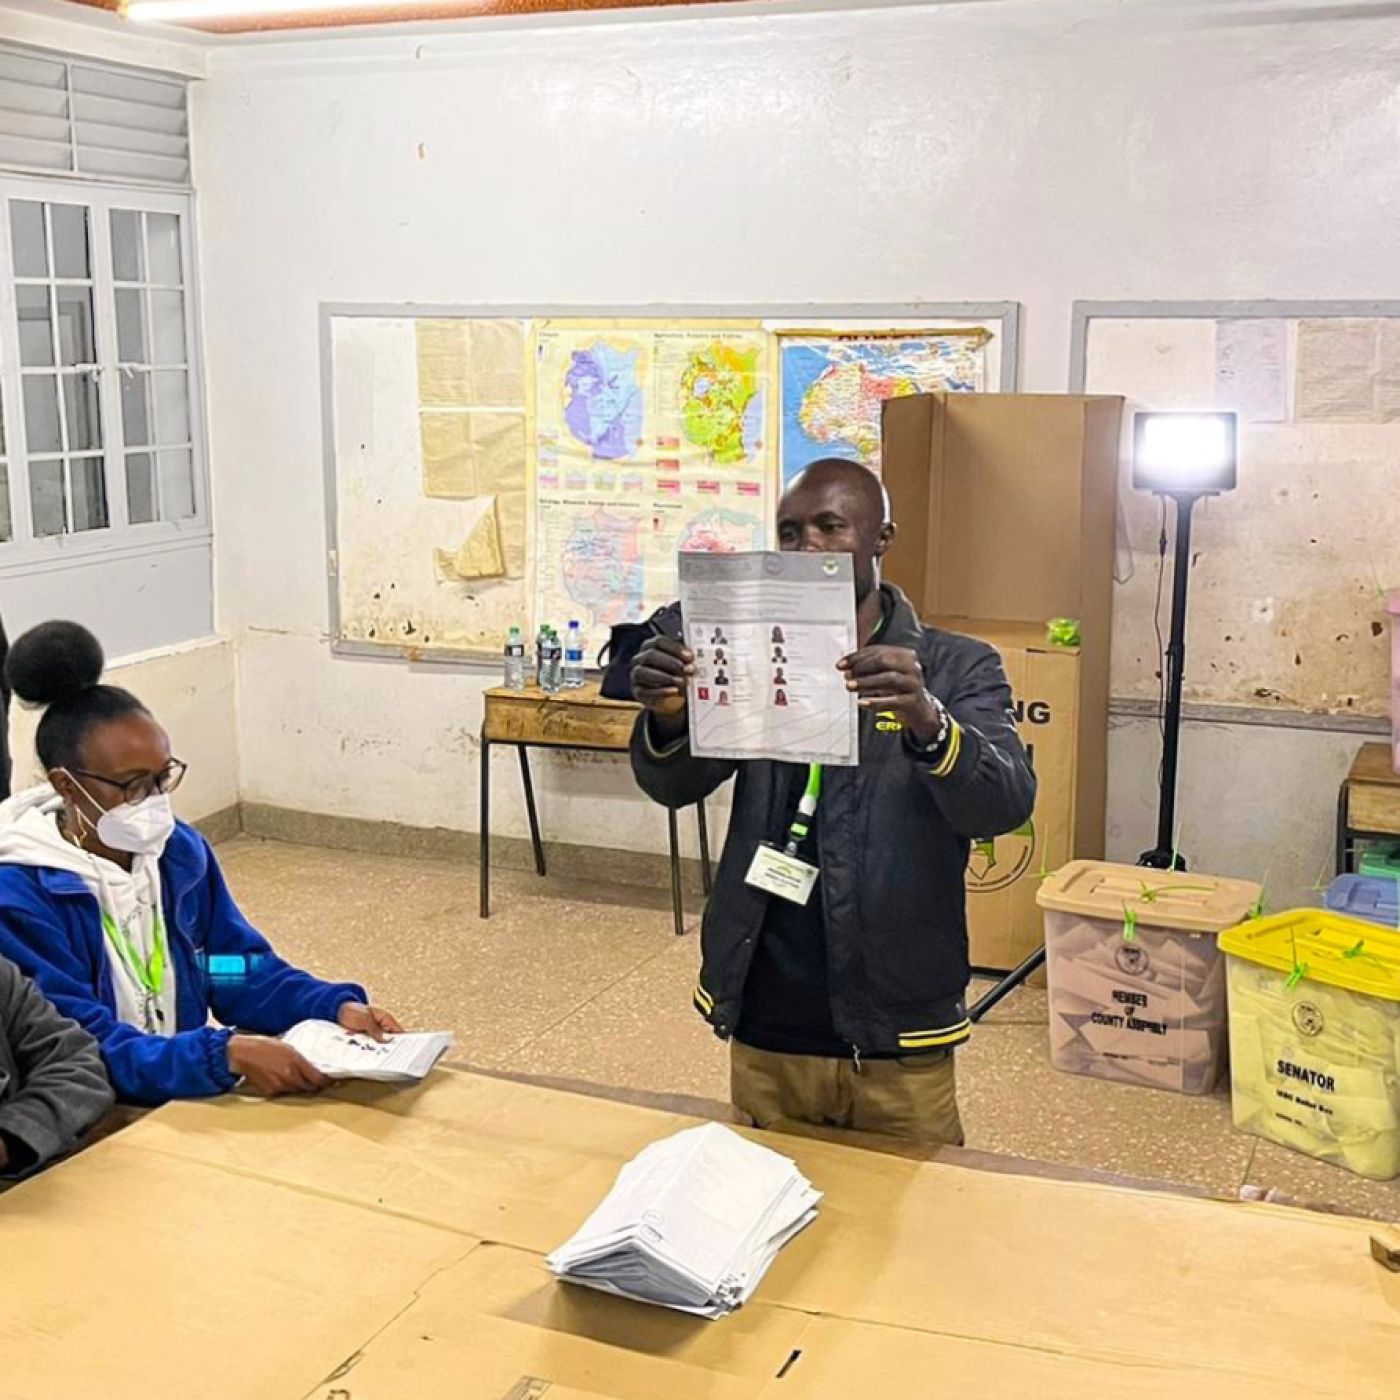 Election workers in Kenya